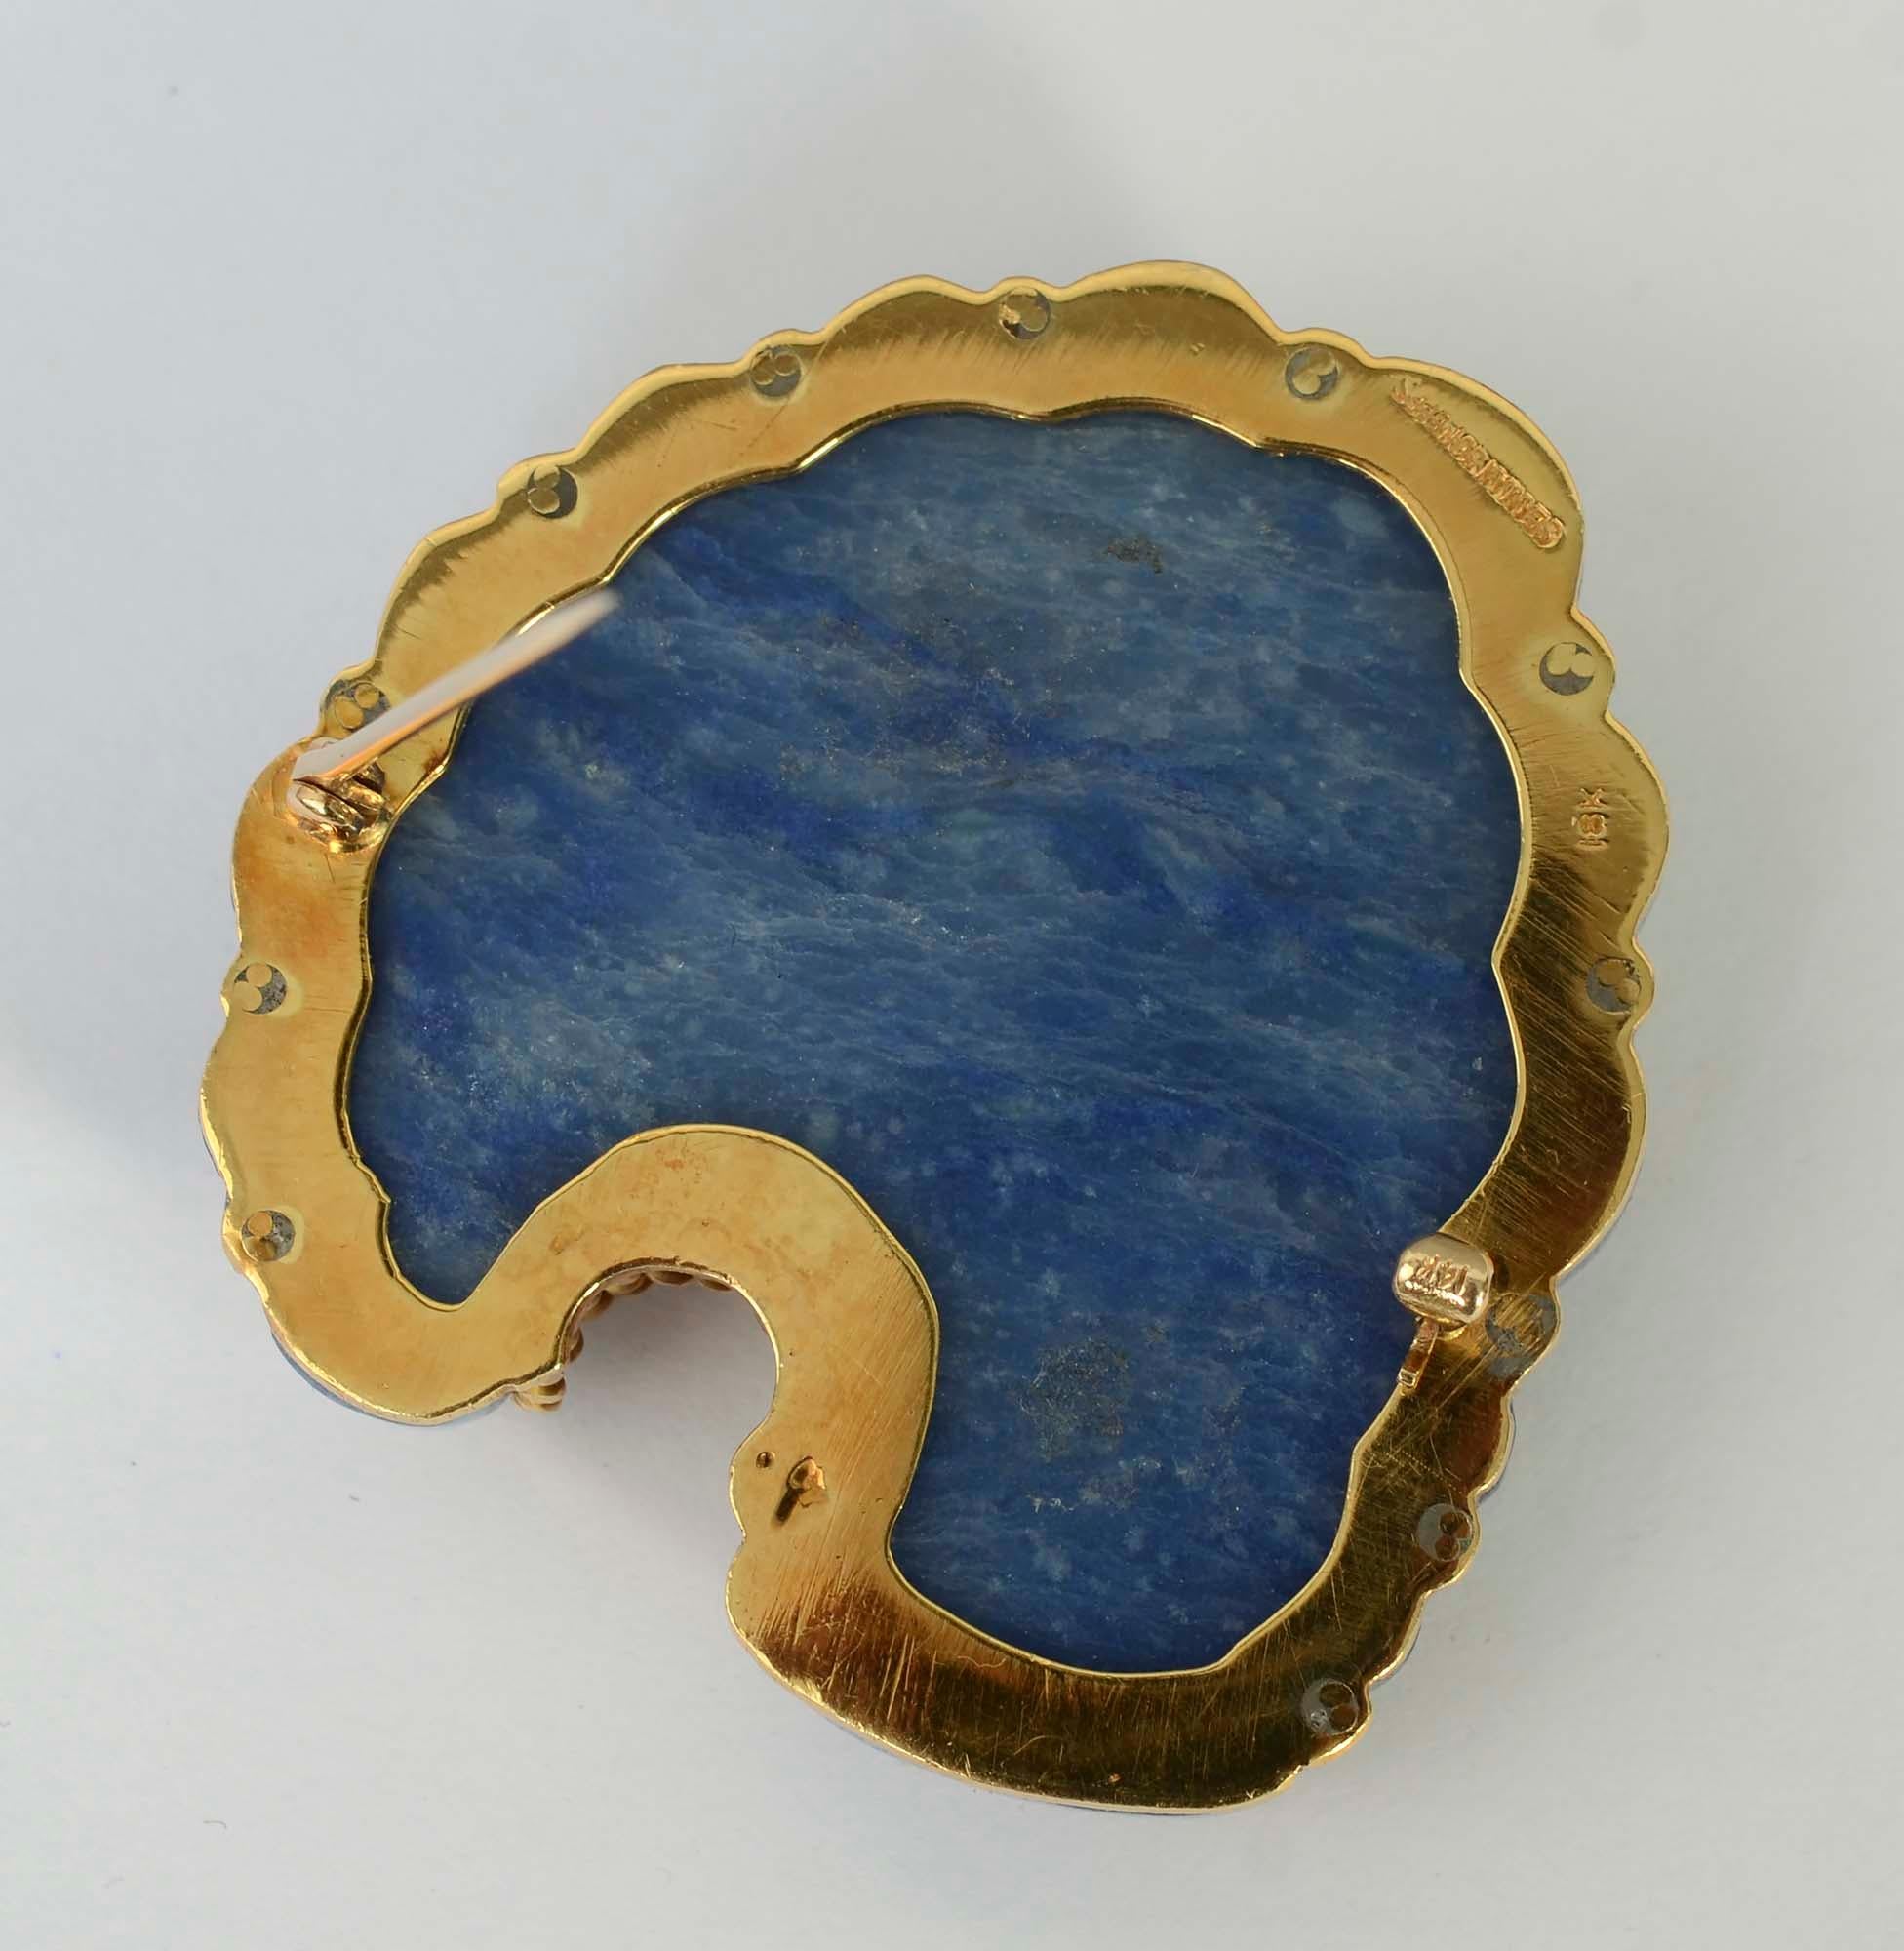 Modern Seaman Schepps Gold and Sodalite Carved Shell Brooch